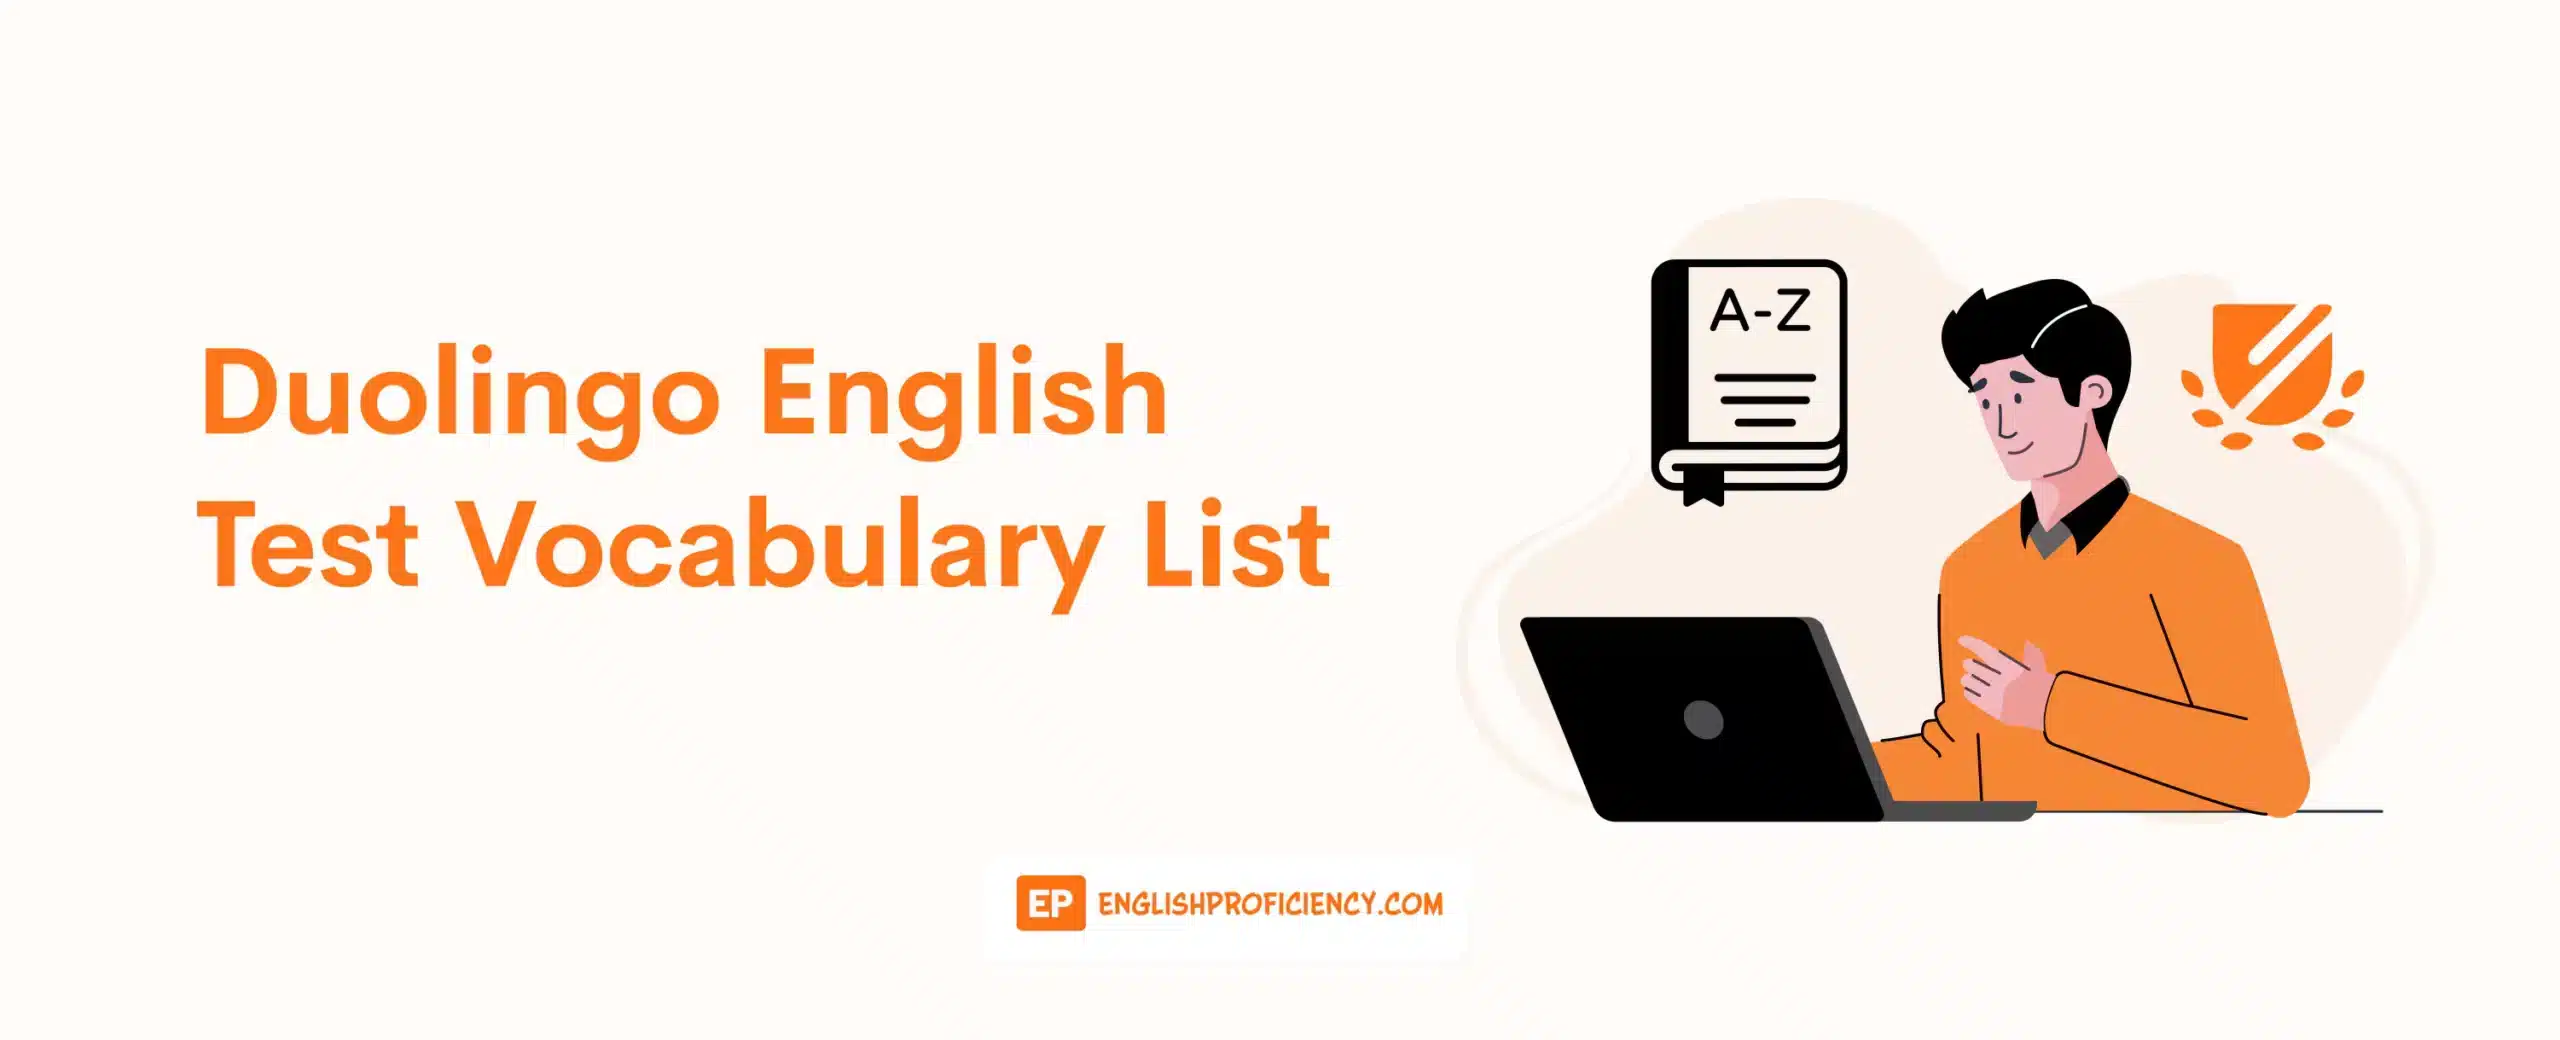 Duolingo English Test Vocabulary List